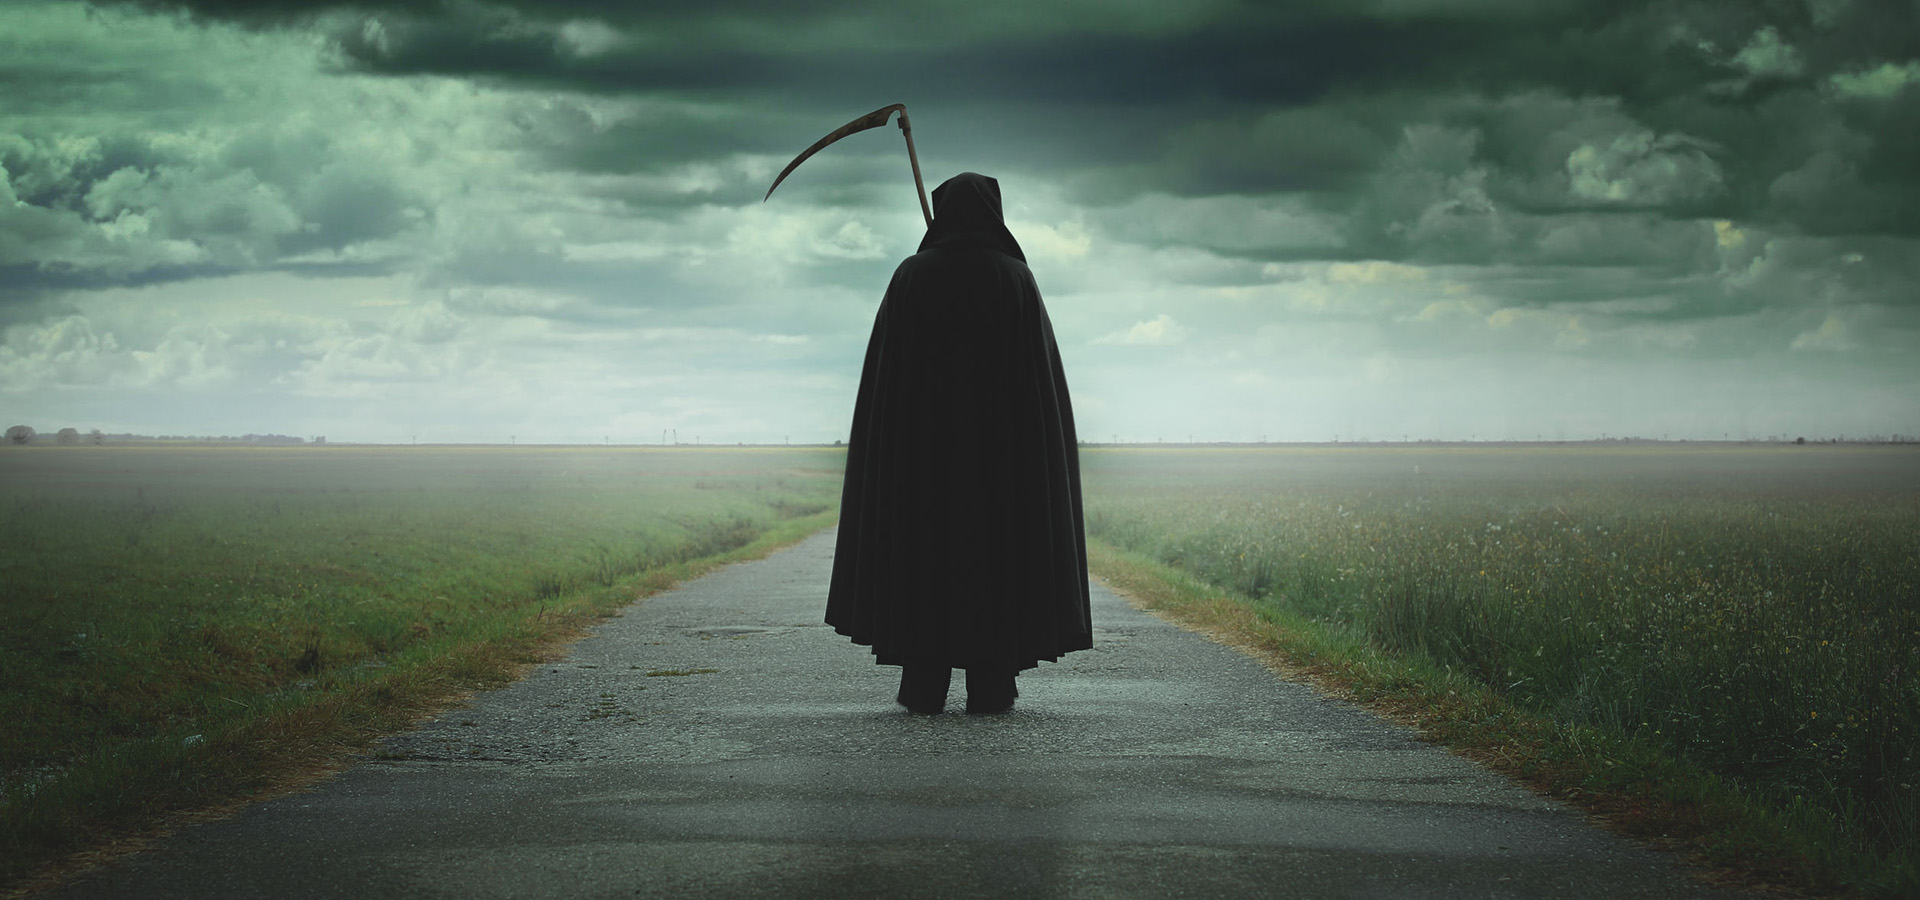 Grim reaper walking on a dark desolate road